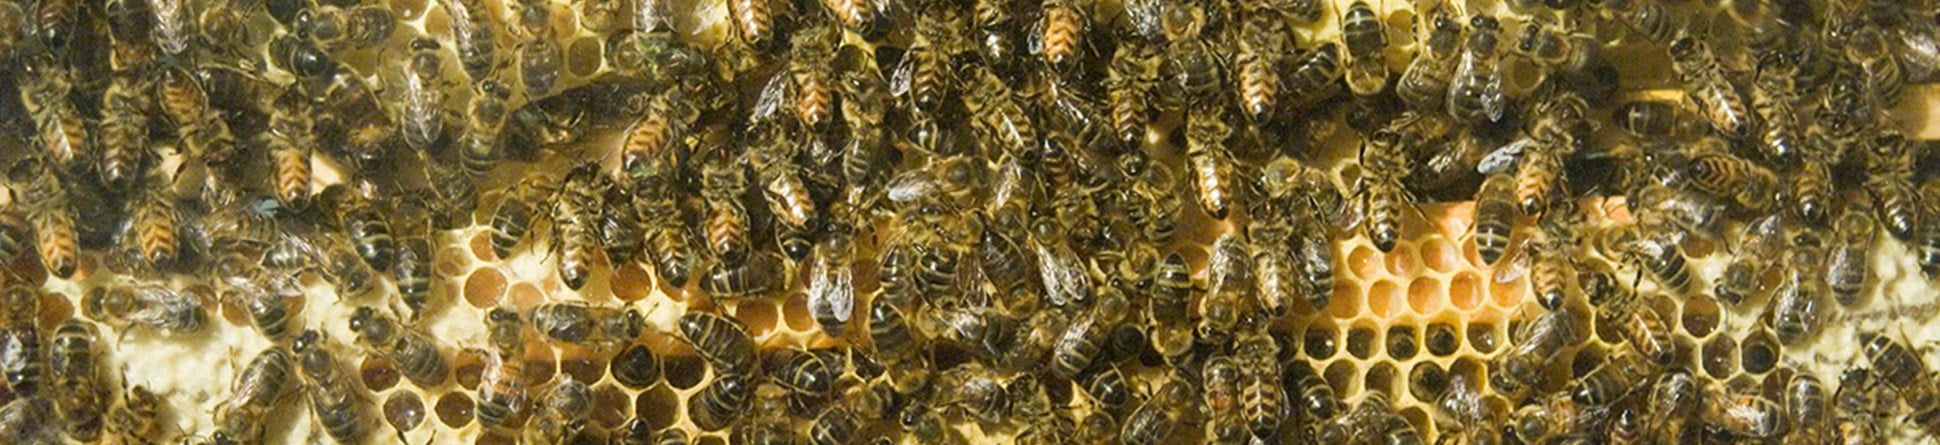 Mass of bees on a hexagonal honey comb surface.